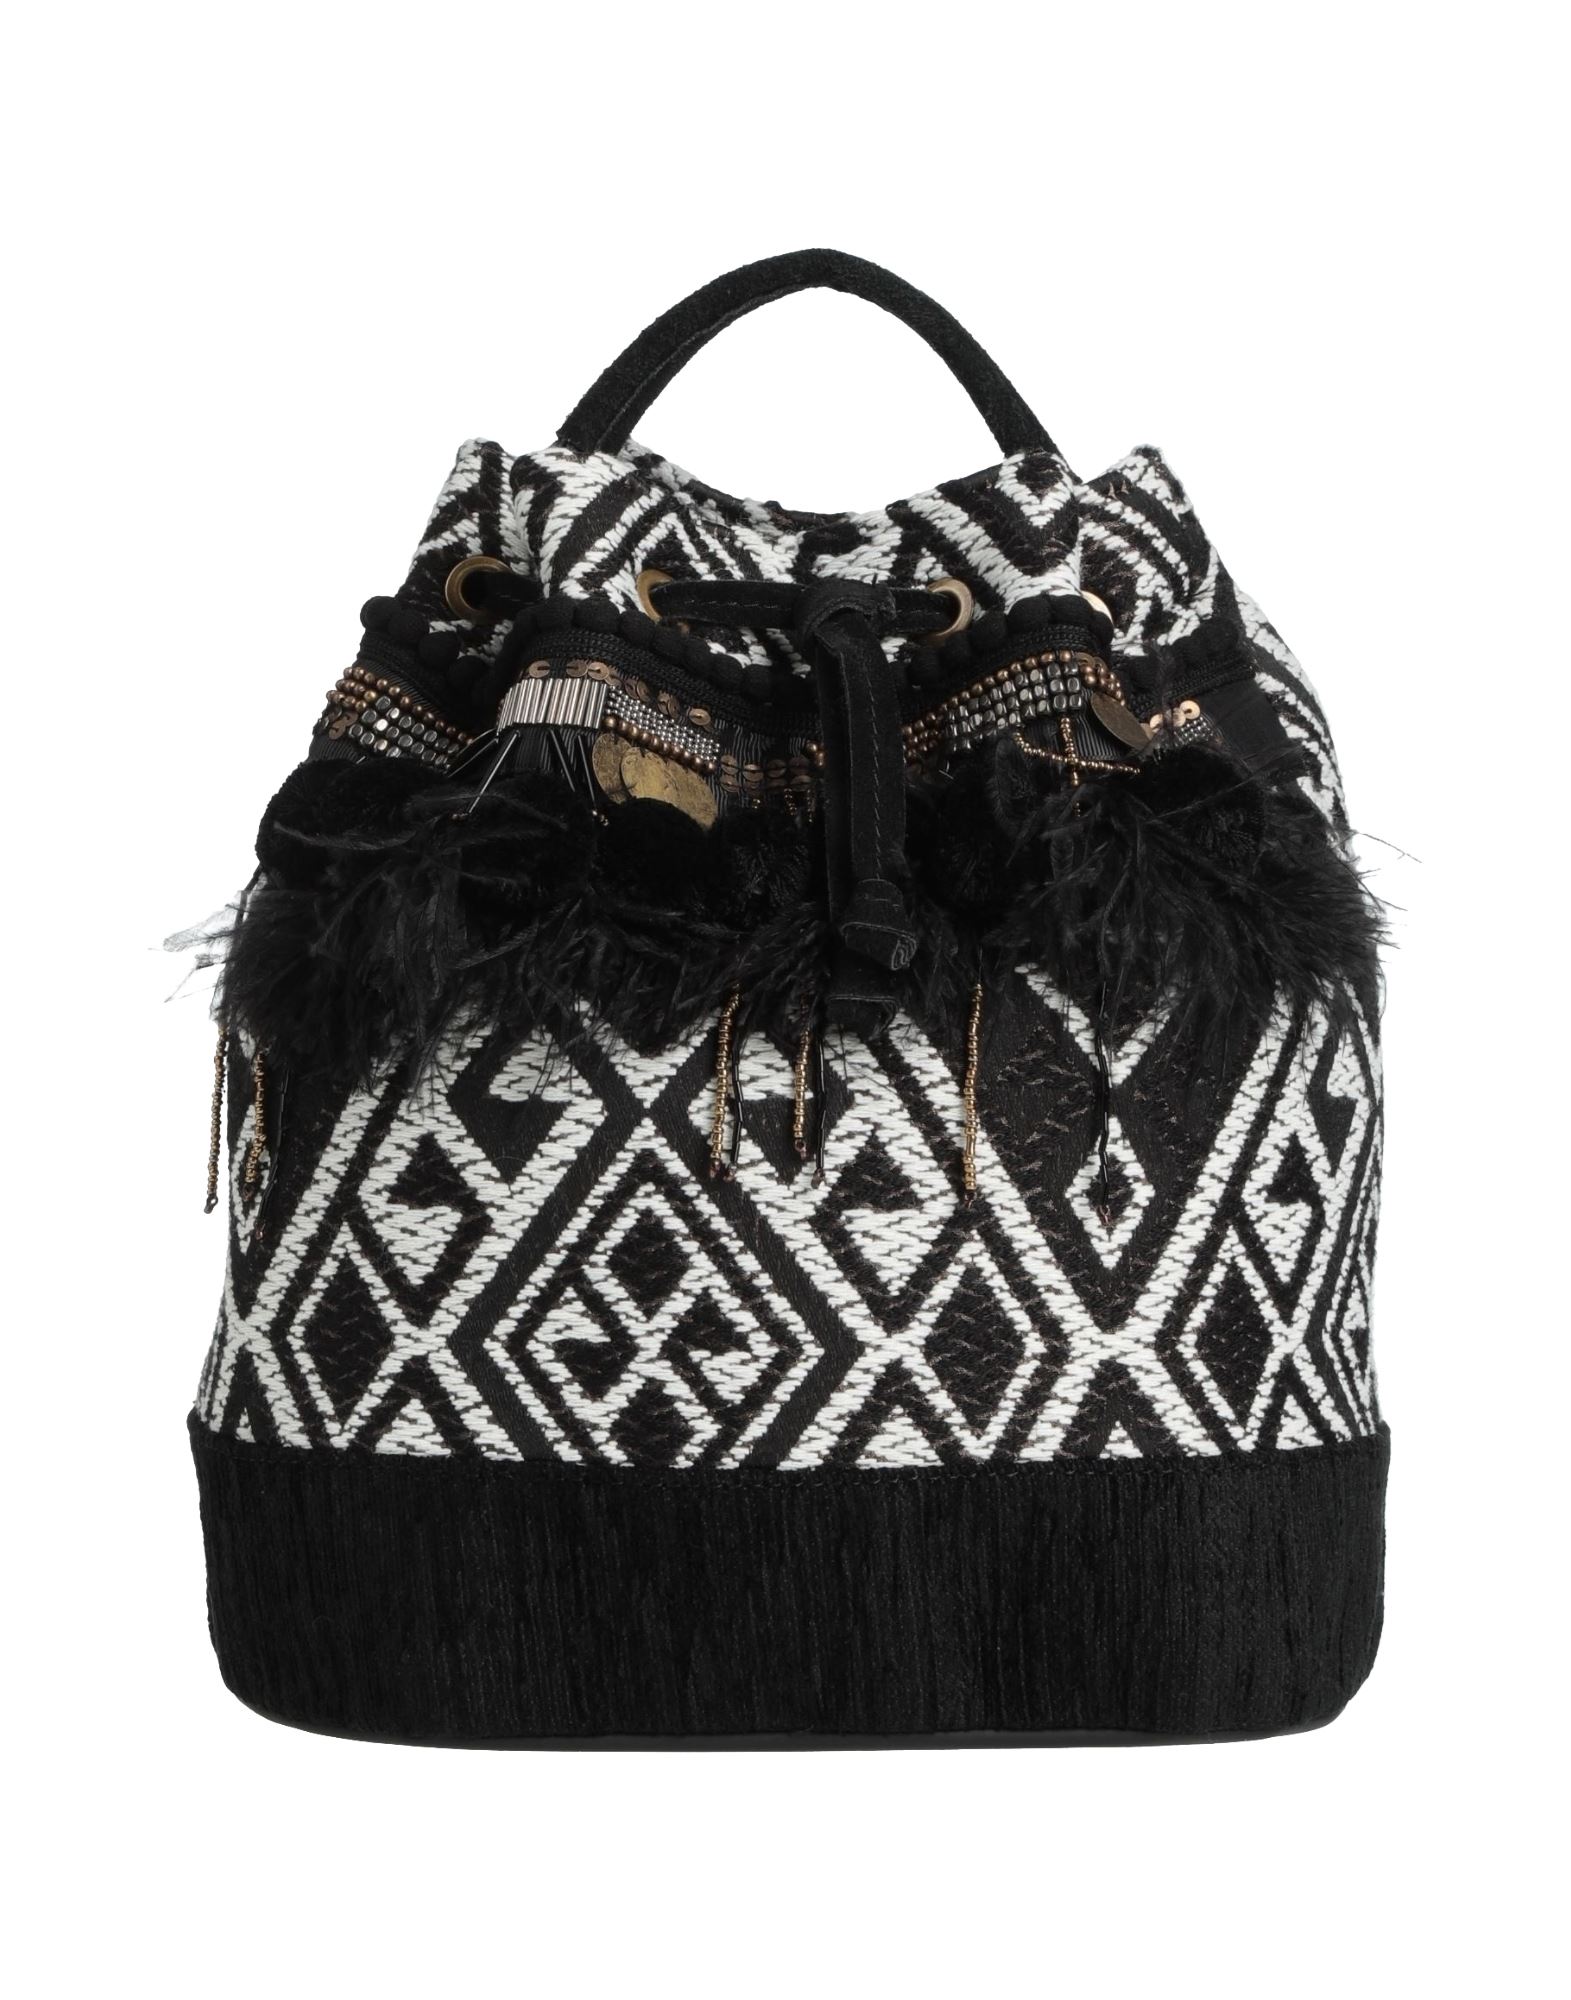 Viamailbag Handbags In Black